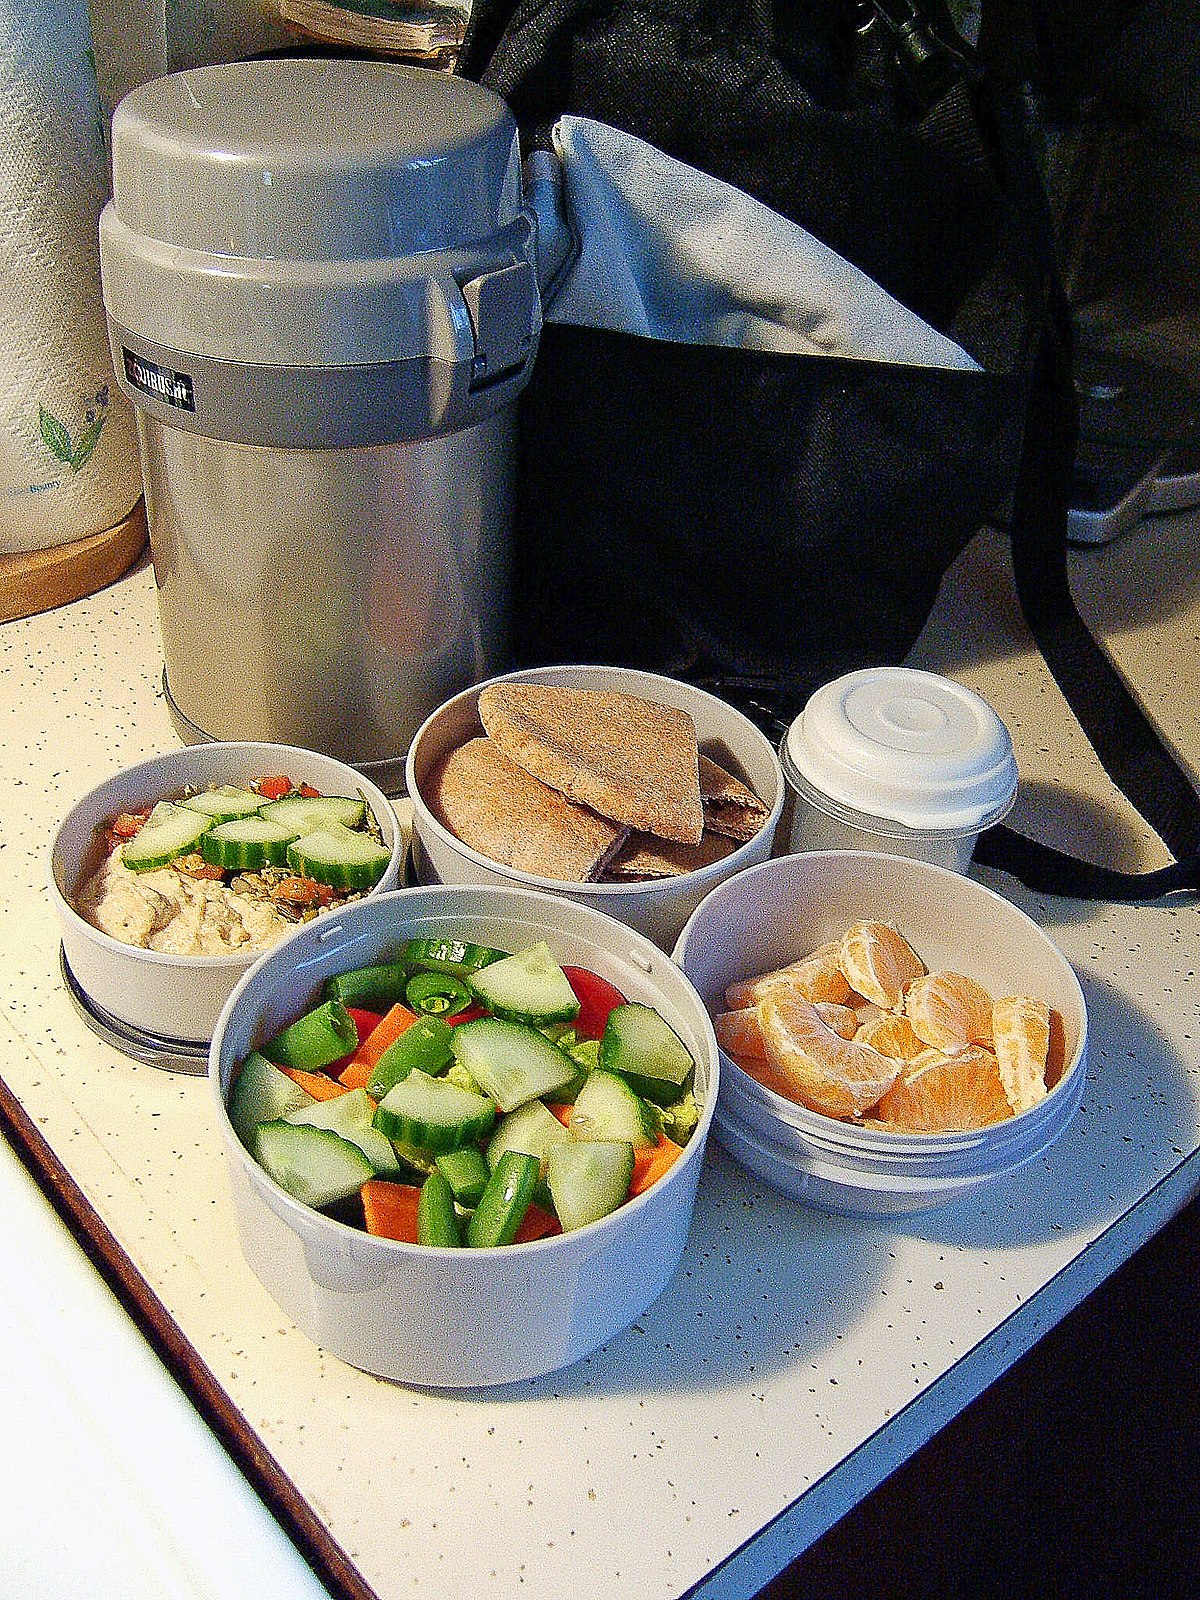 File:ZOJIRUSHI lunch jar.jpg - Wikipedia